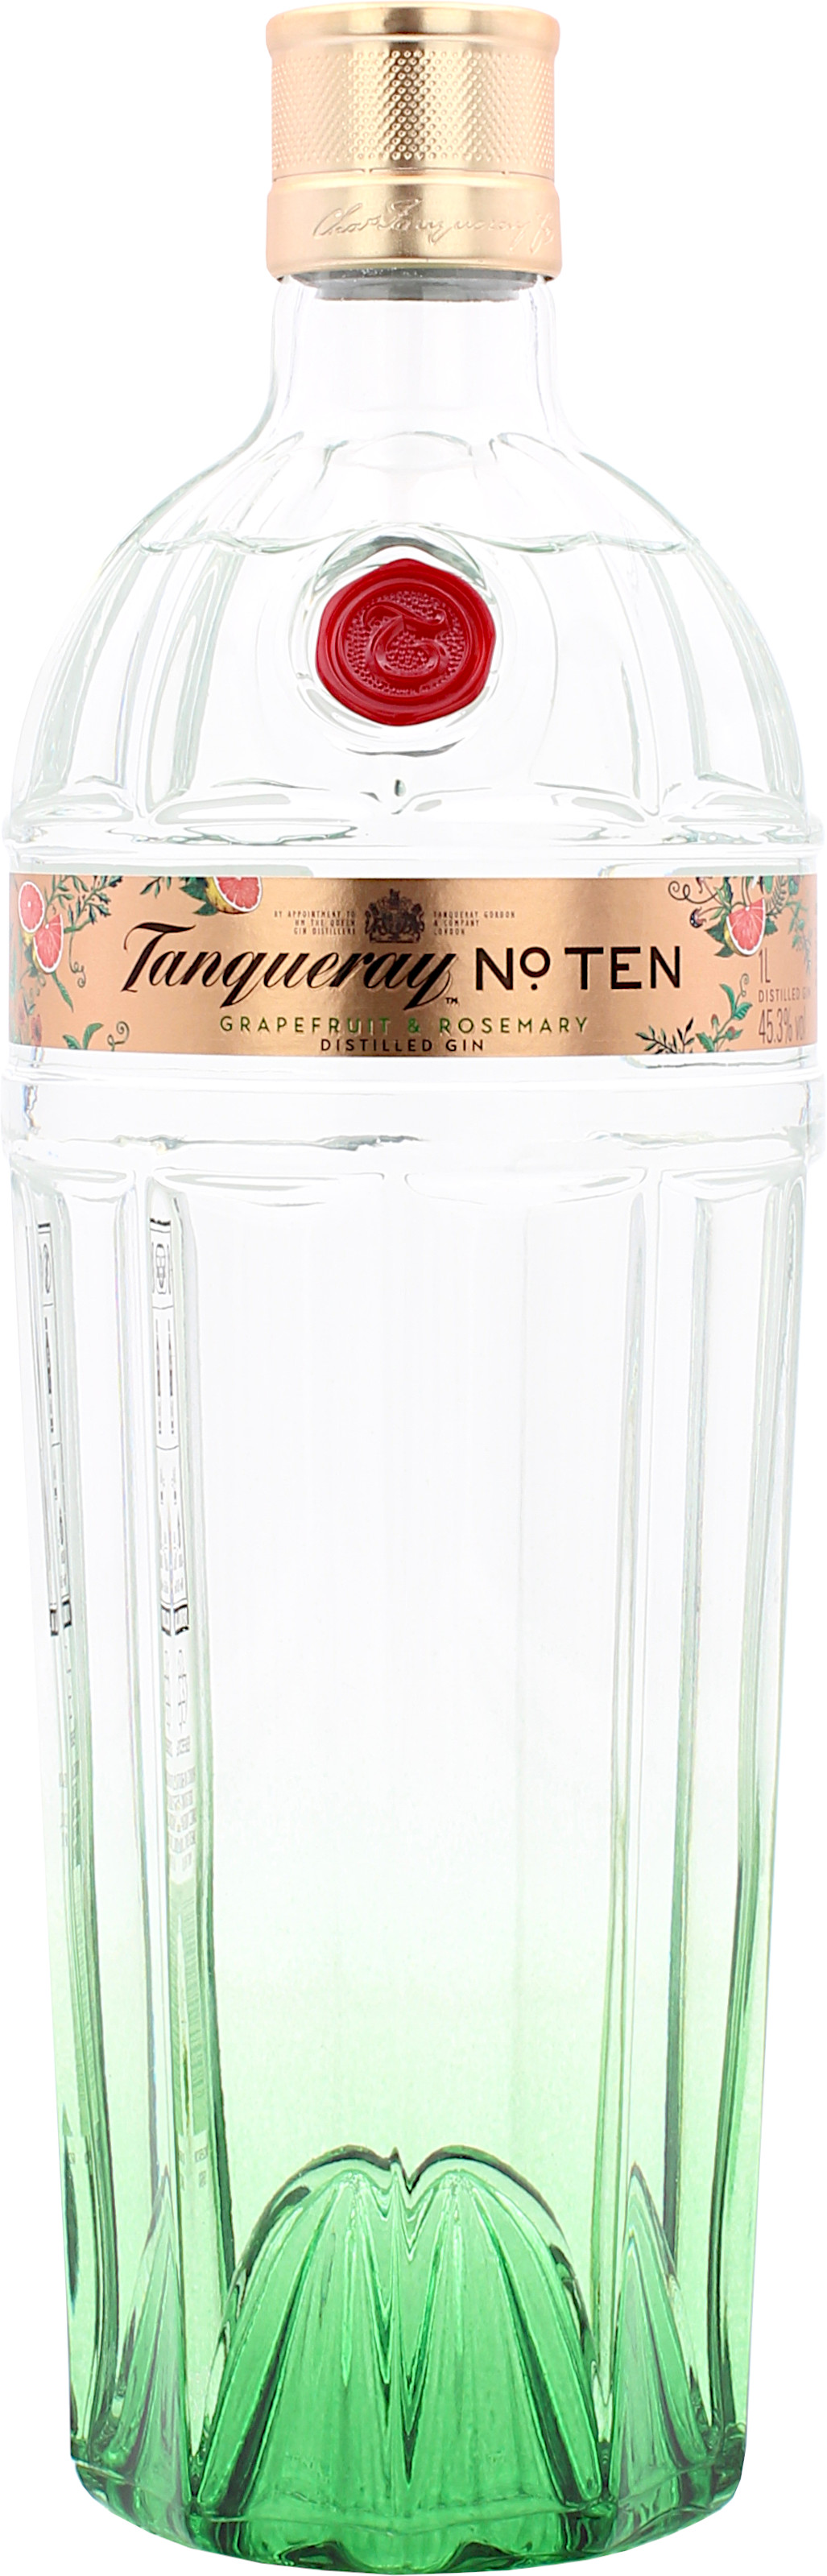 Tanqueray No. Ten Citrus Heart Edition 45.3% 1 Liter